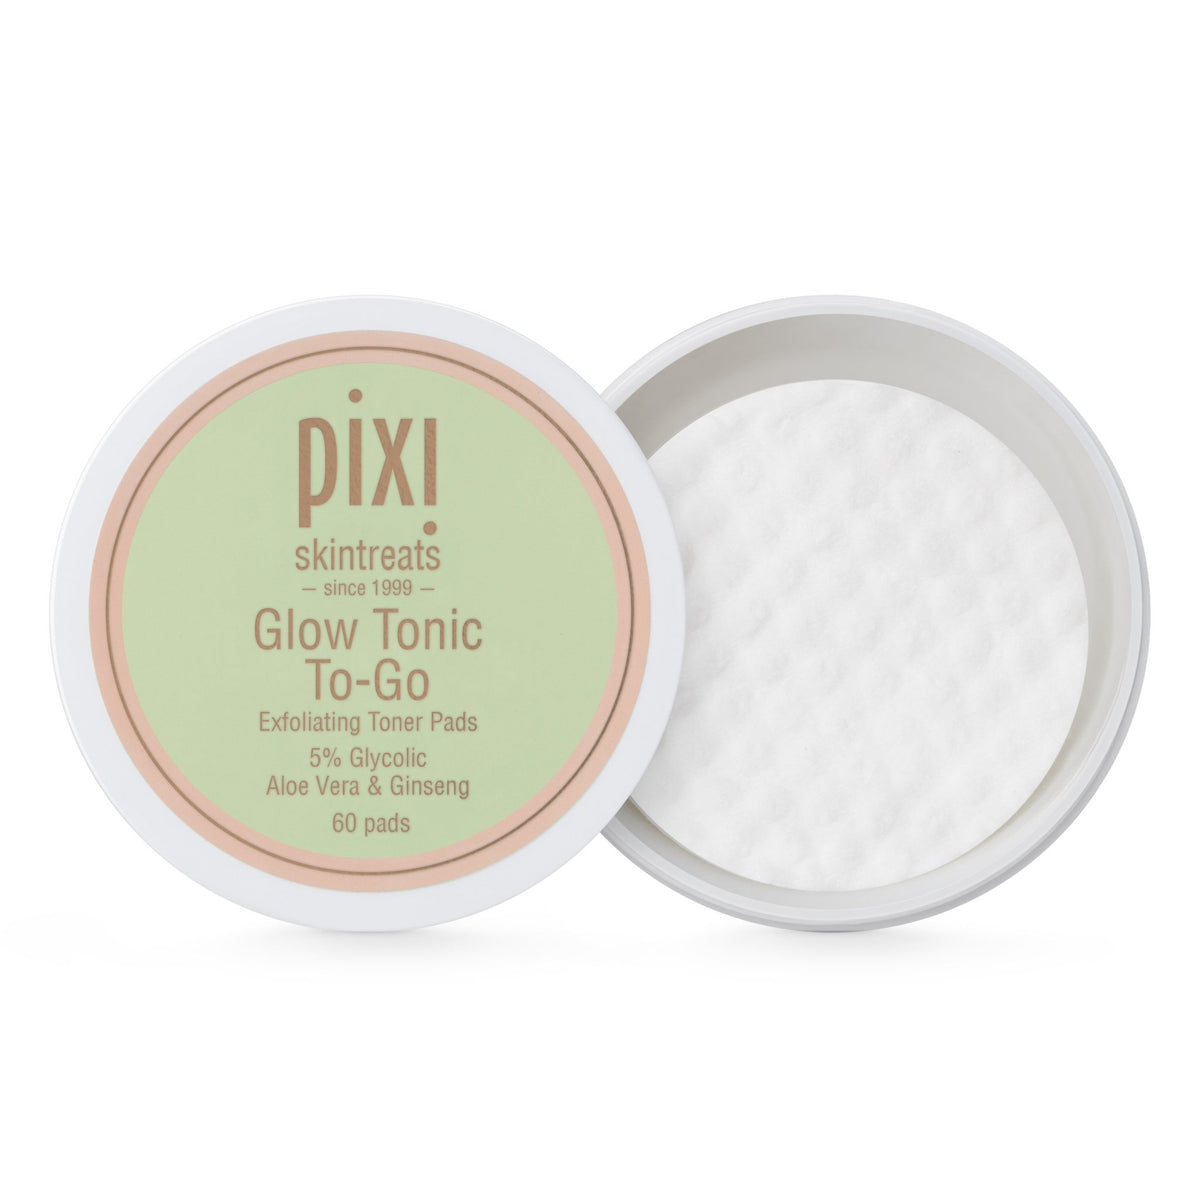 Pixi Glow Tonic To-go Exfoliating Toner 60Pads/Rondelles - AllurebeautypkPixi Glow Tonic To-go Exfoliating Toner 60Pads/Rondelles